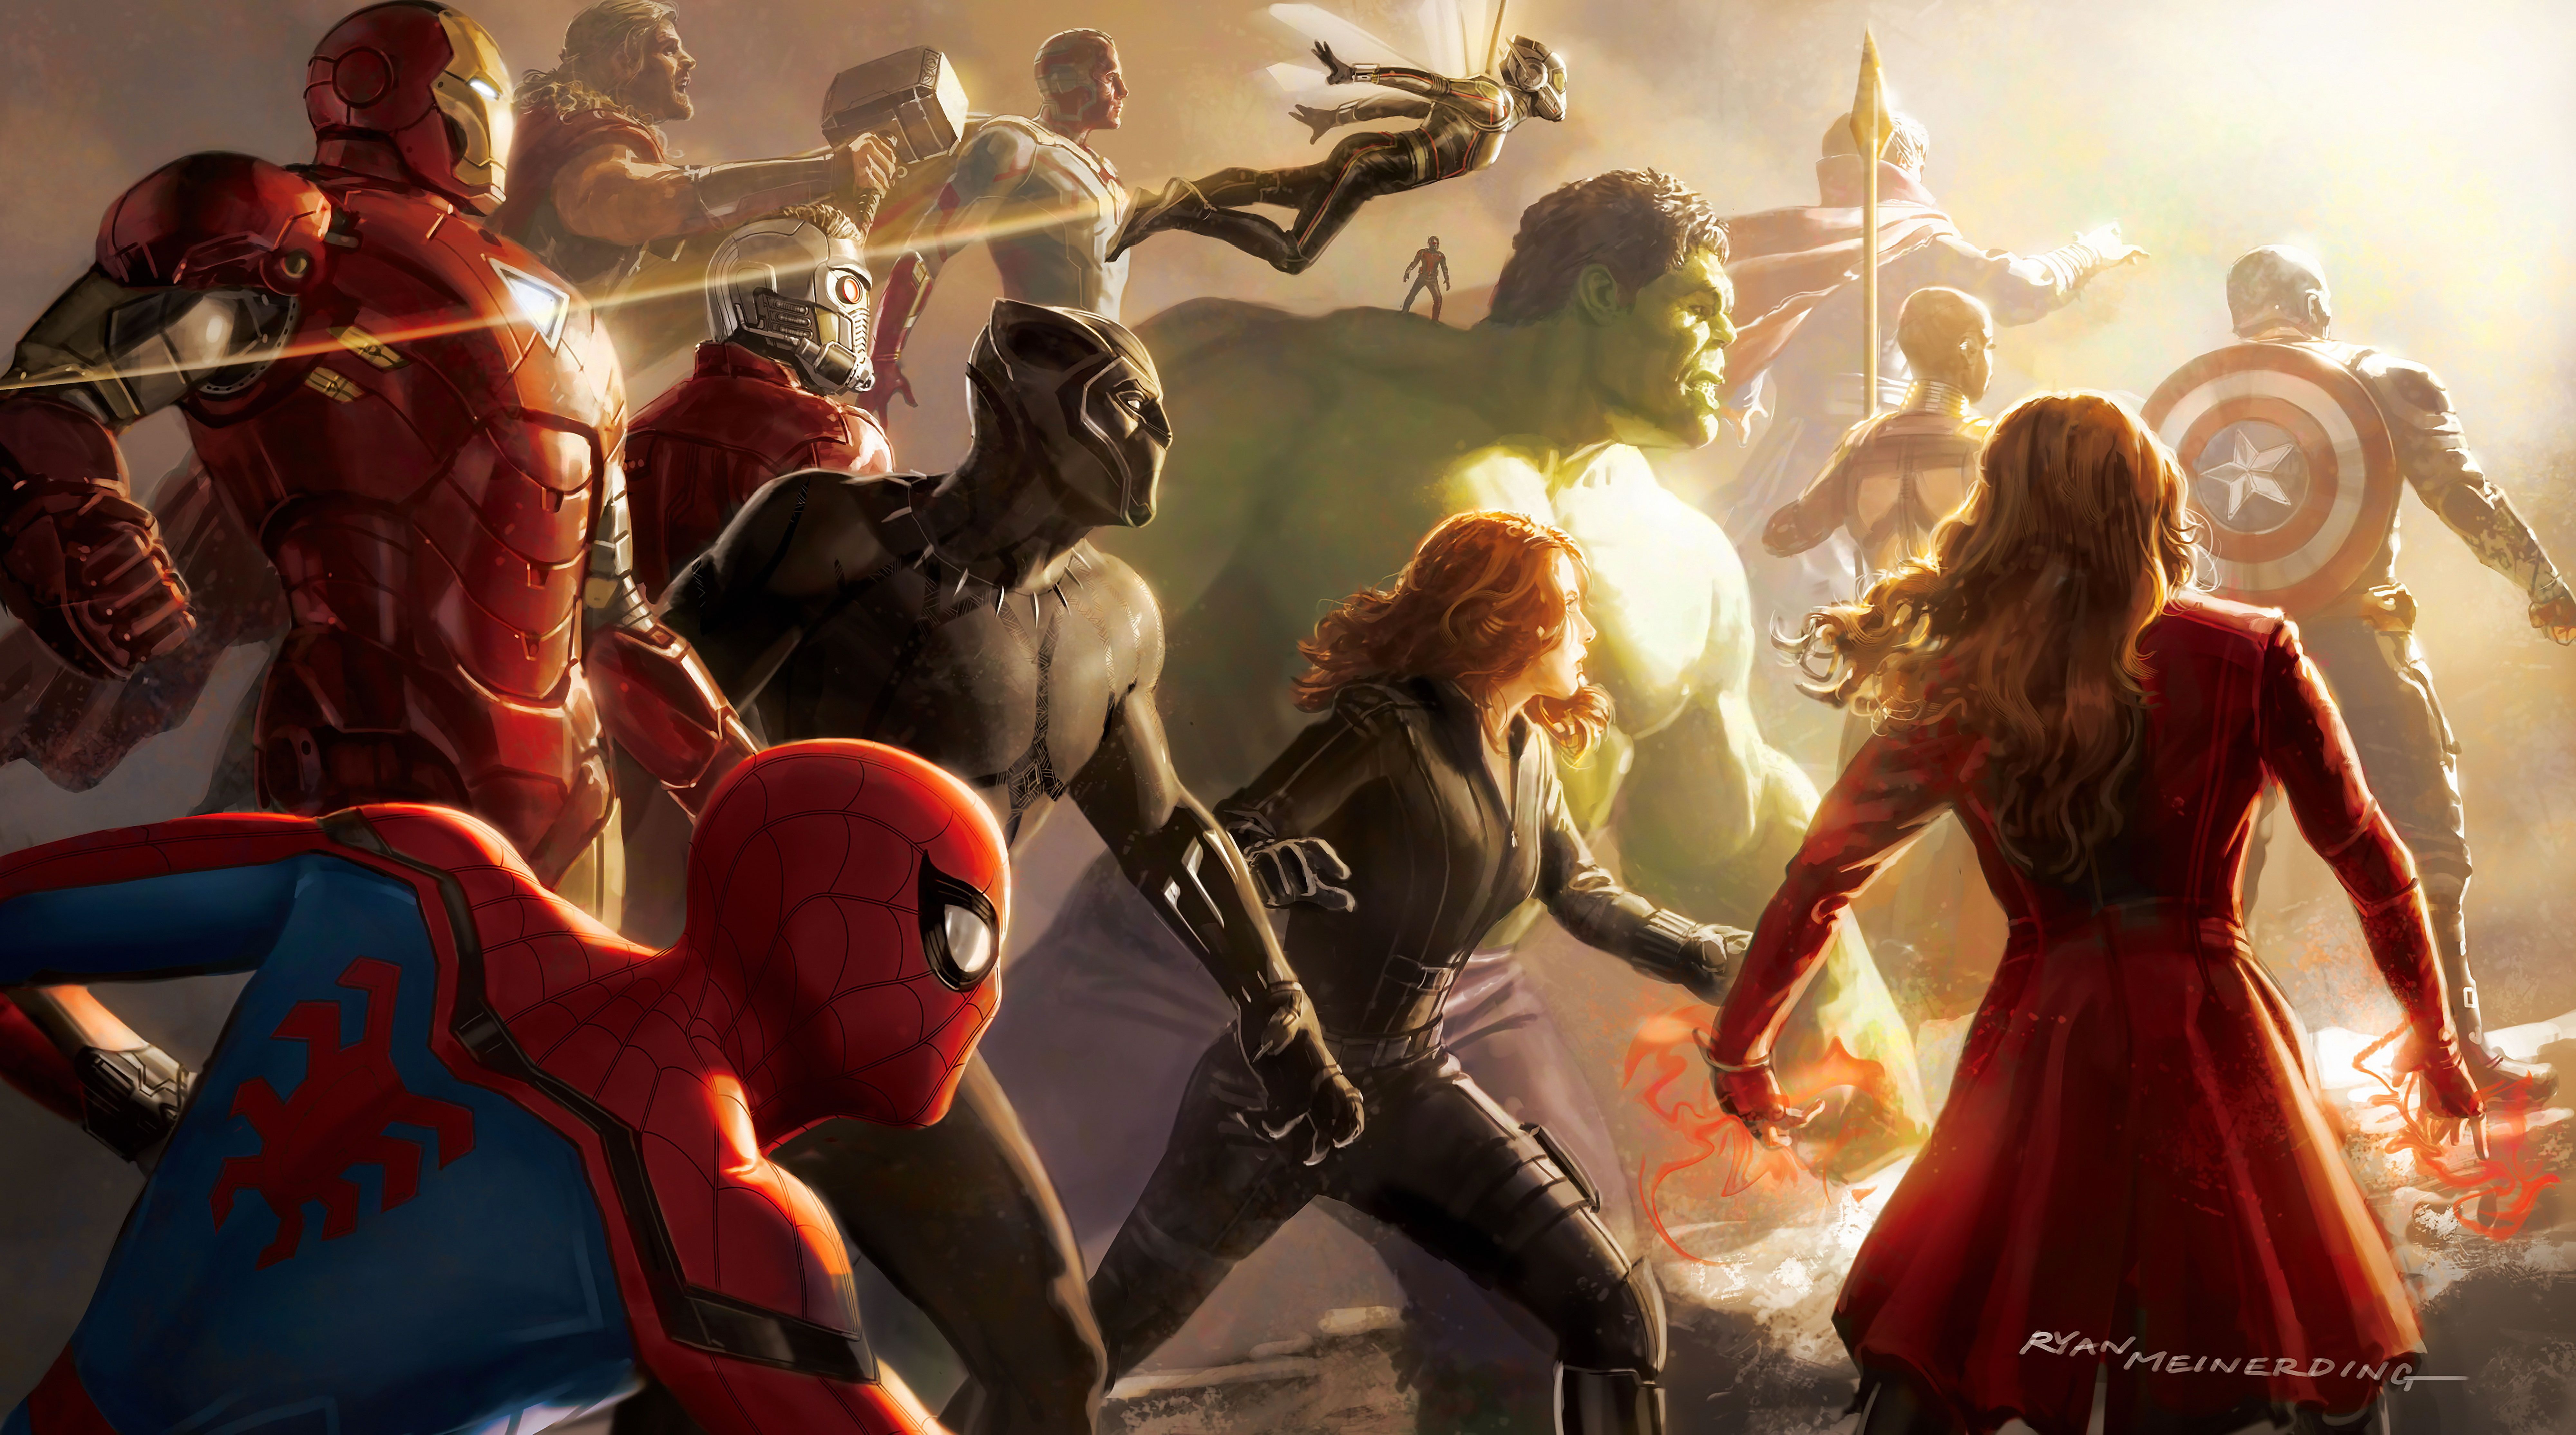 Marvel Cinematic Universe Superhero Artwork Wallpapers